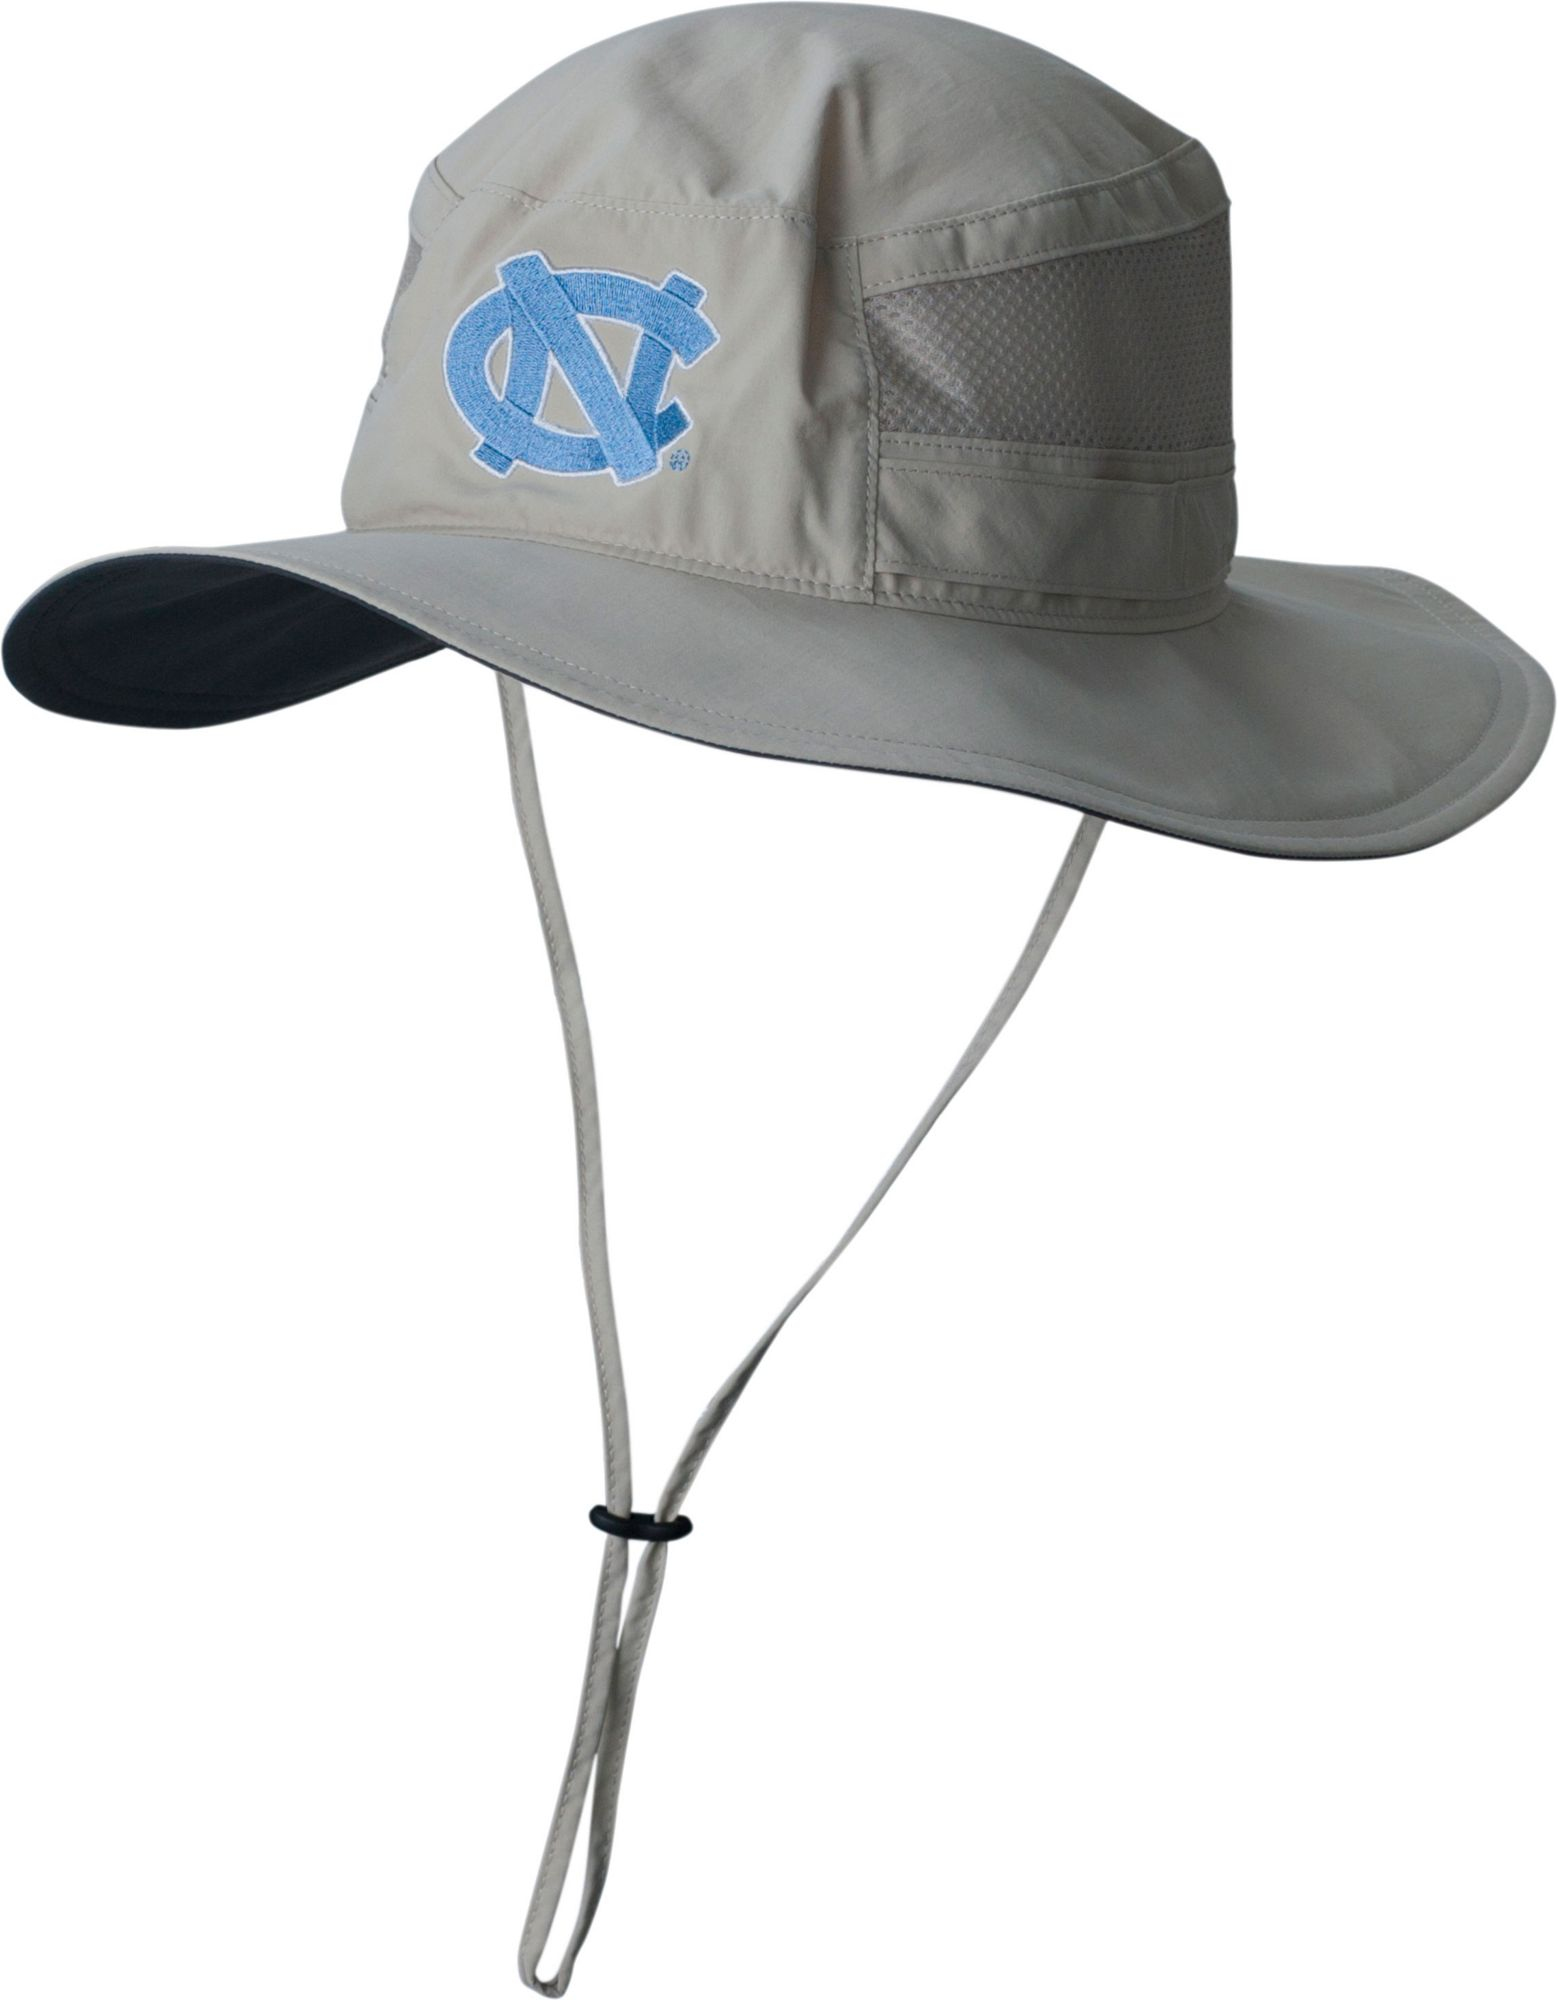 Columbia Men's North Carolina Tar Heels Grey Bora Bora Booney Hat, Gray